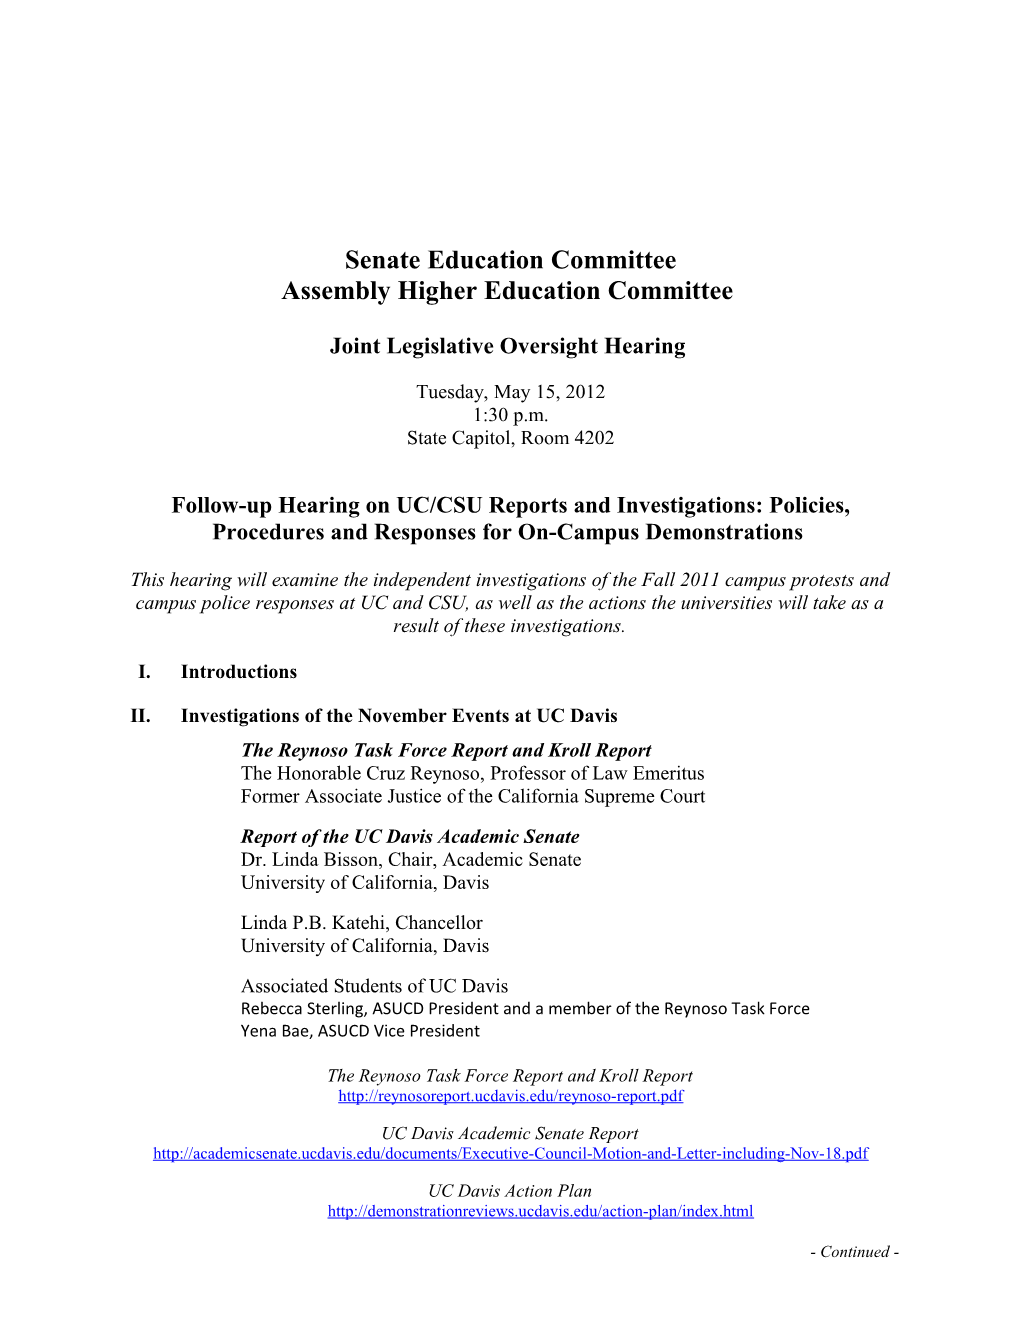 Joint Legislative Oversight Hearing Page 2